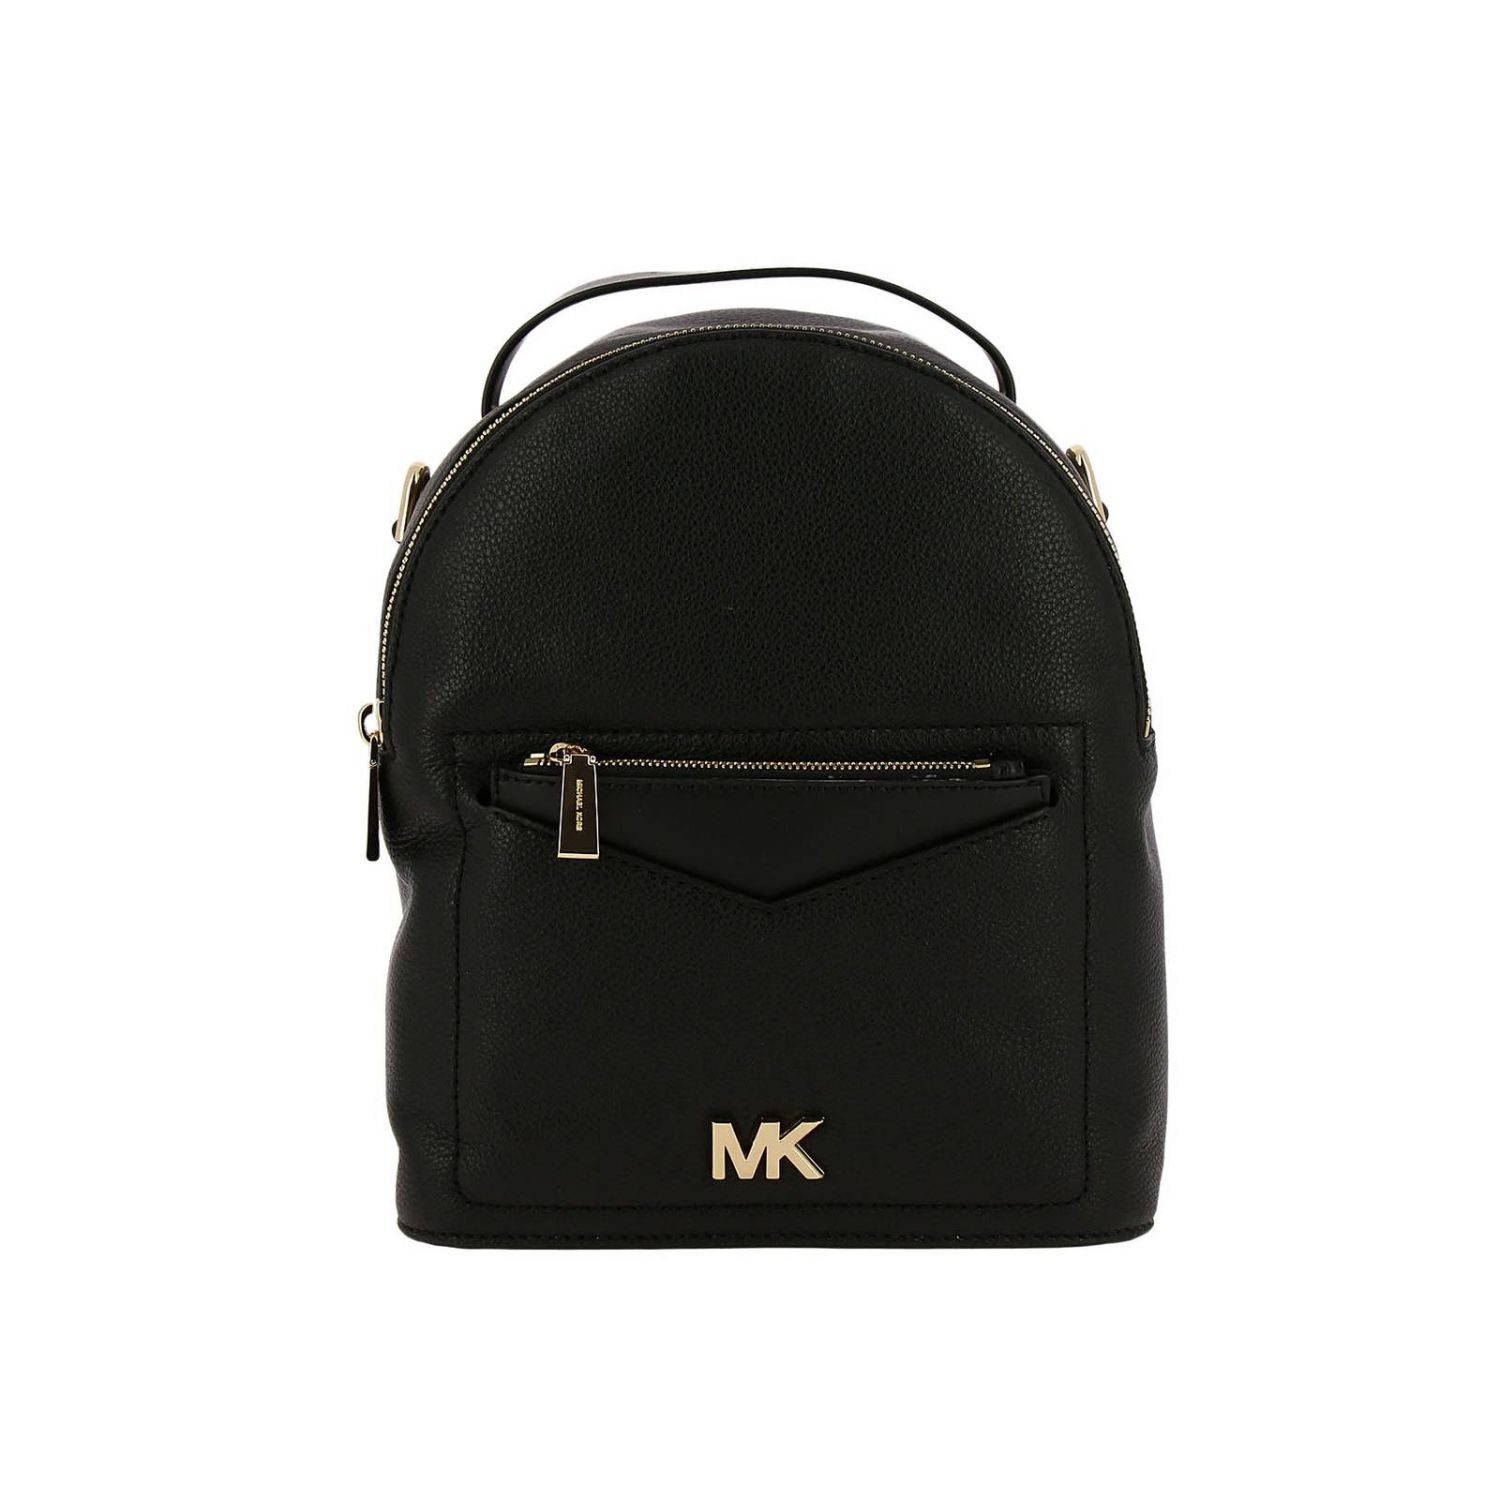 Michael Kors Outlet: Backpack women Michael - Black | Backpack Michael ...